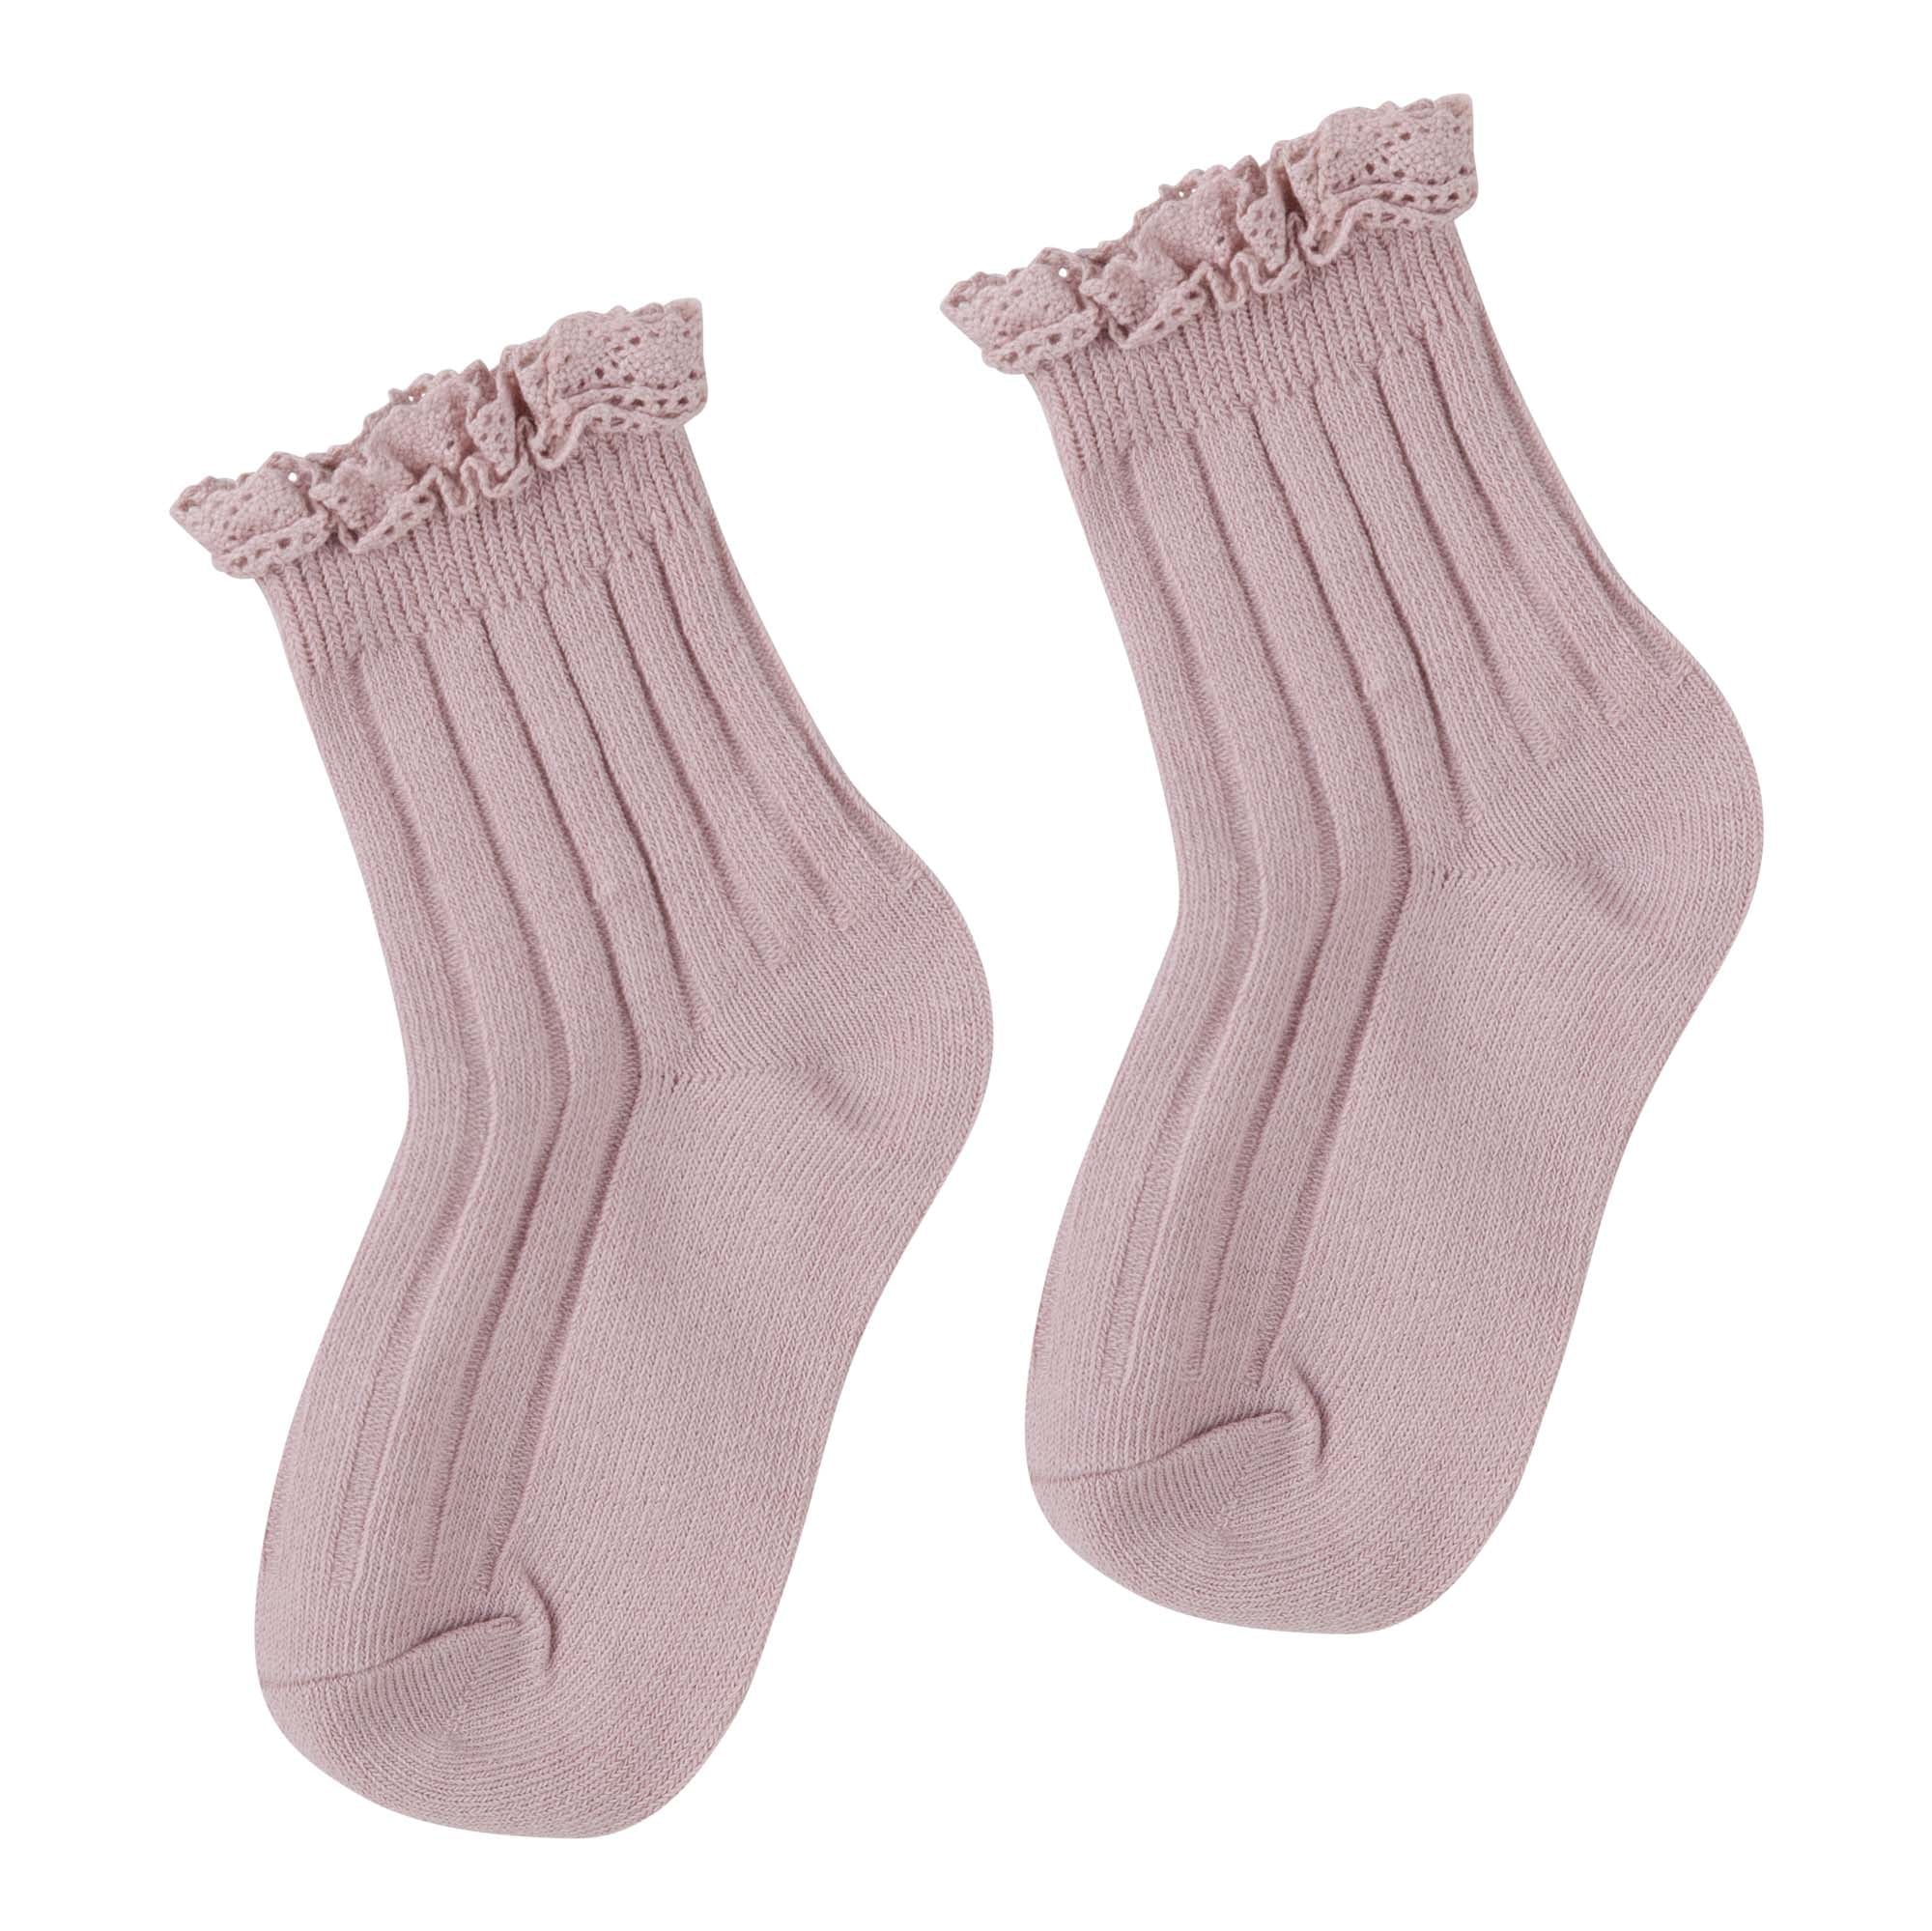 Designer Kidz Accessory Socks Dusty Pink / 1-3Y Lace Frill Crew Socks